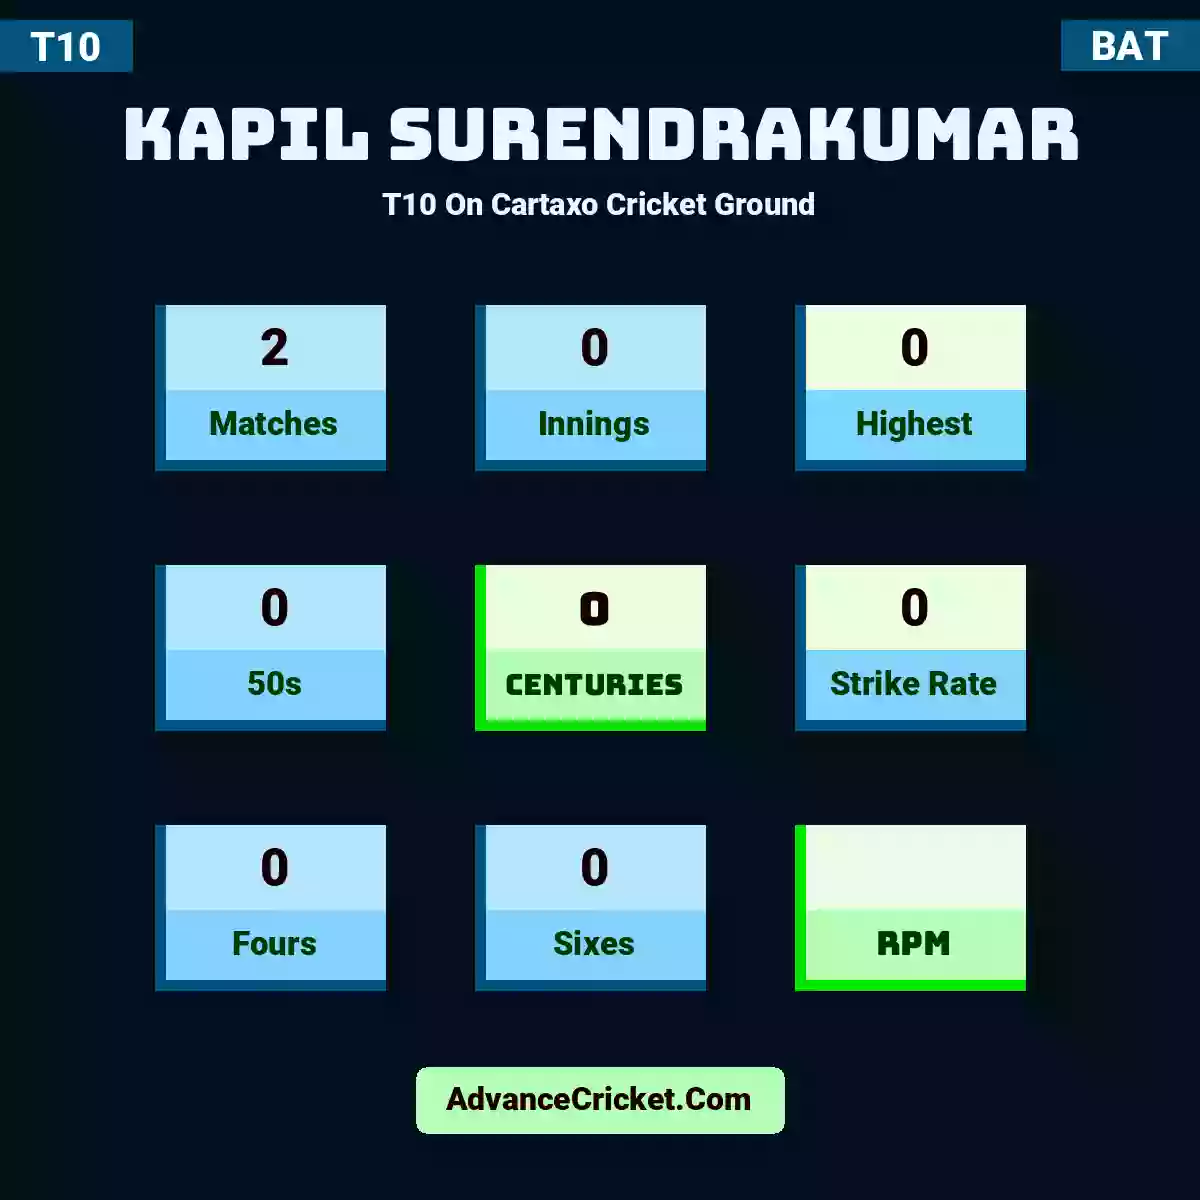 Kapil Surendrakumar T10  On Cartaxo Cricket Ground, Kapil Surendrakumar played 2 matches, scored 0 runs as highest, 0 half-centuries, and 0 centuries, with a strike rate of 0. K.Surendrakumar hit 0 fours and 0 sixes.